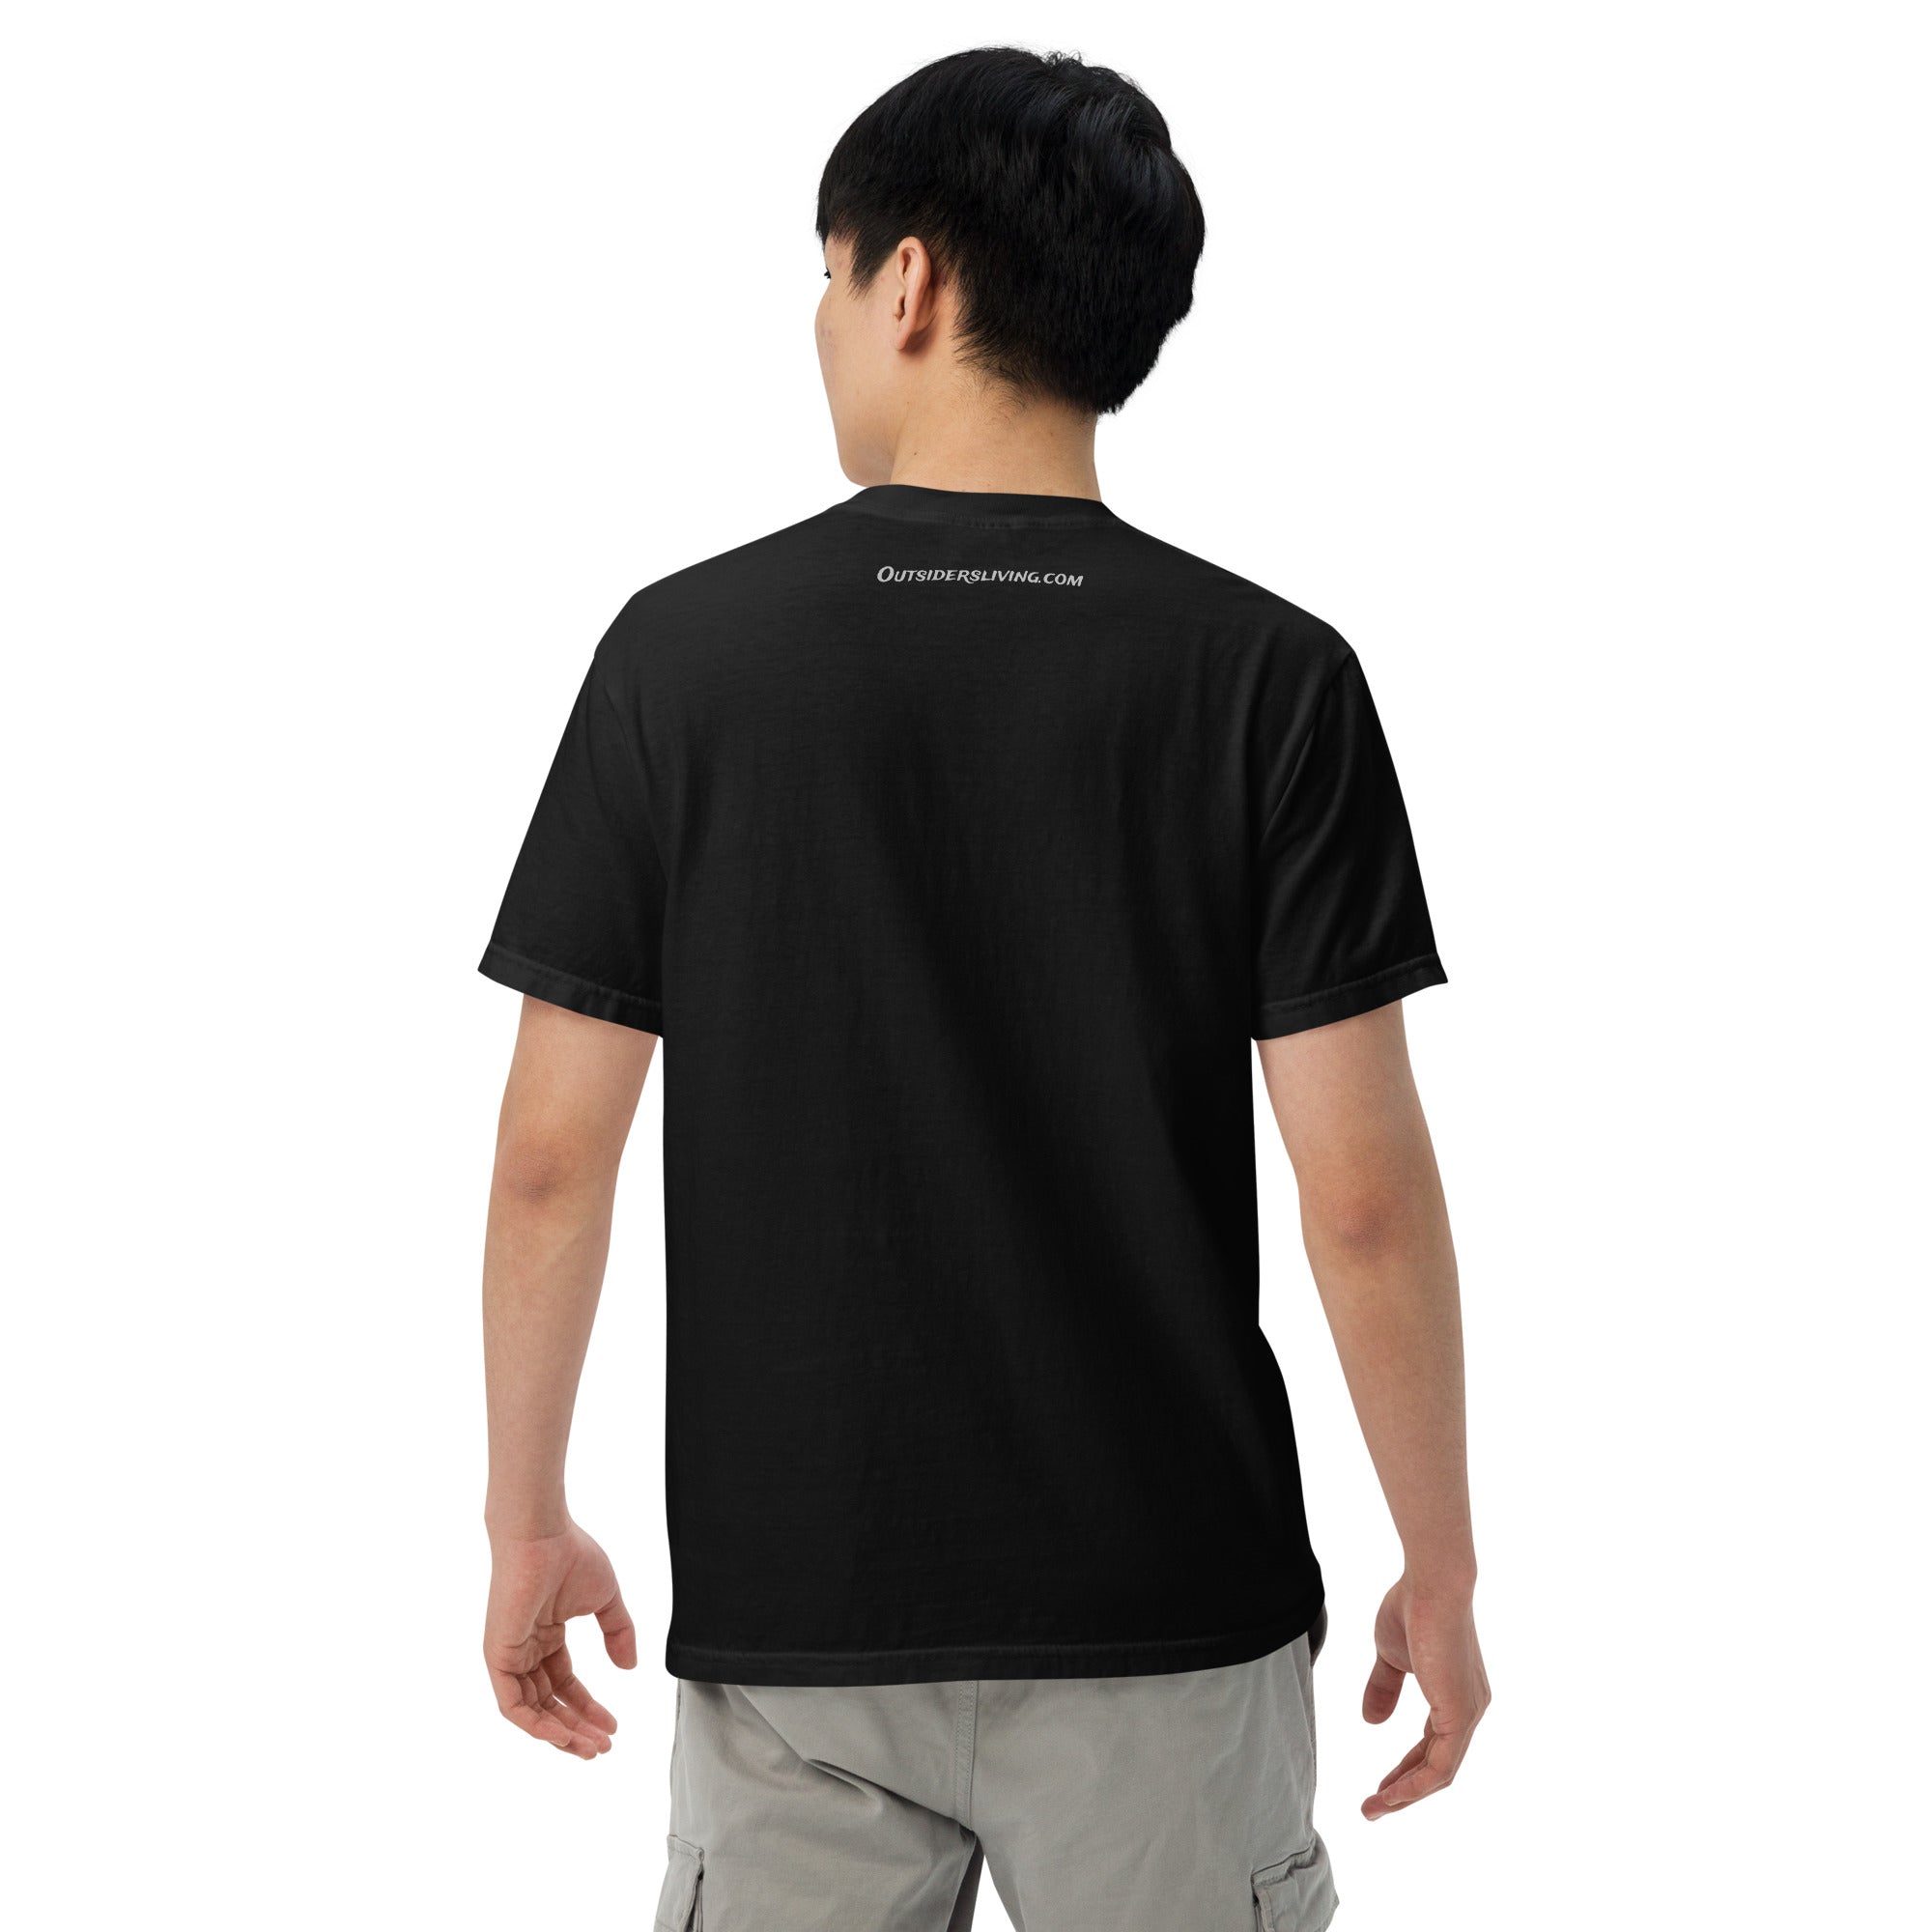 Outsiders Living Men’s Garment-Dyed Heavyweight T-Shirt